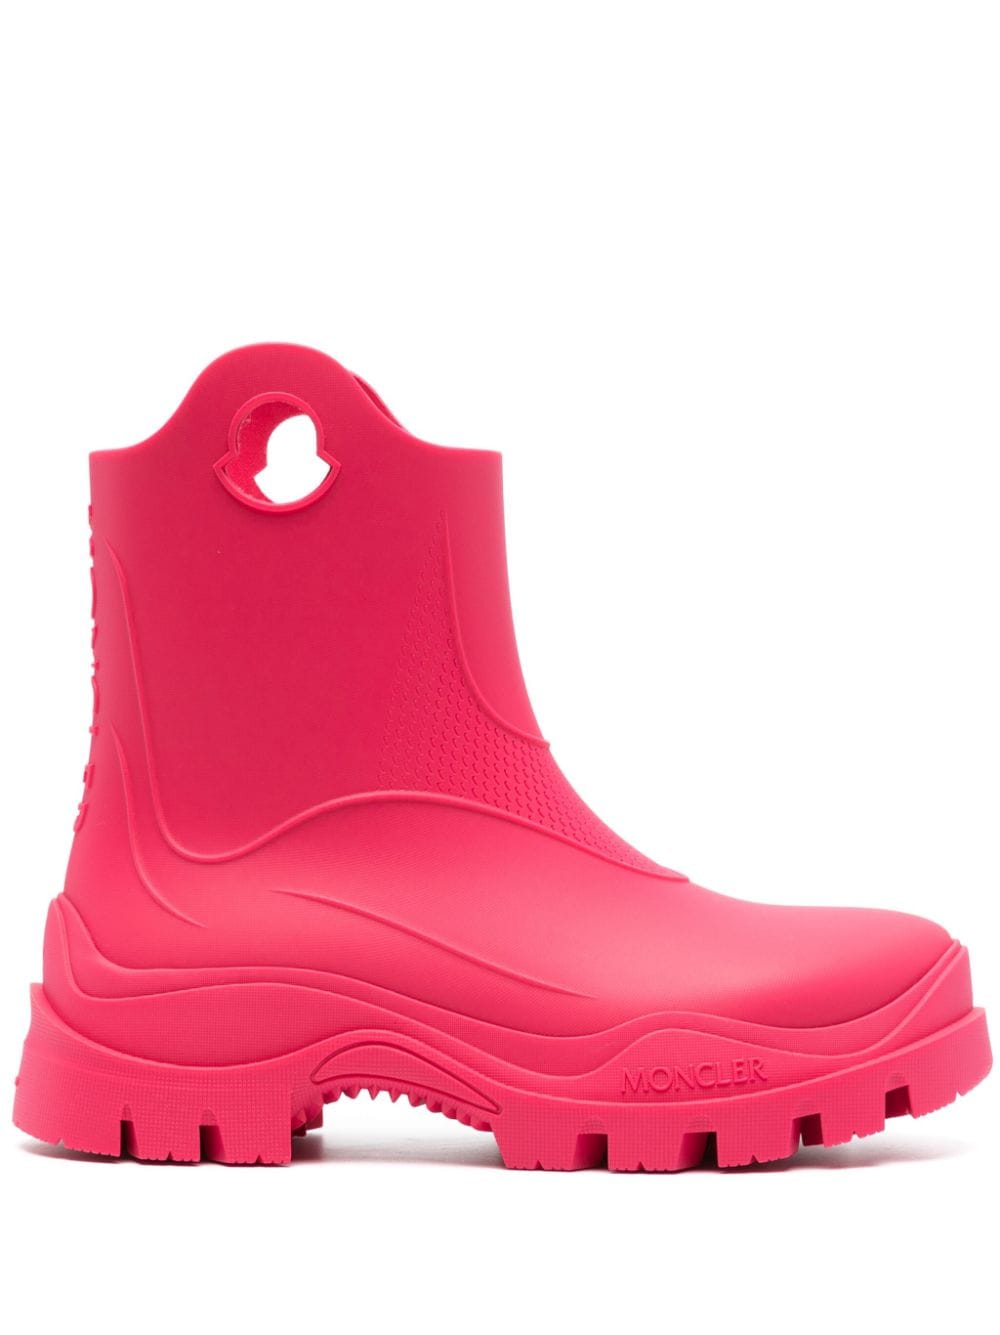 Moncler - Misty rain boots - women - Rubber/Rubber/Rubber - 39 - Pink